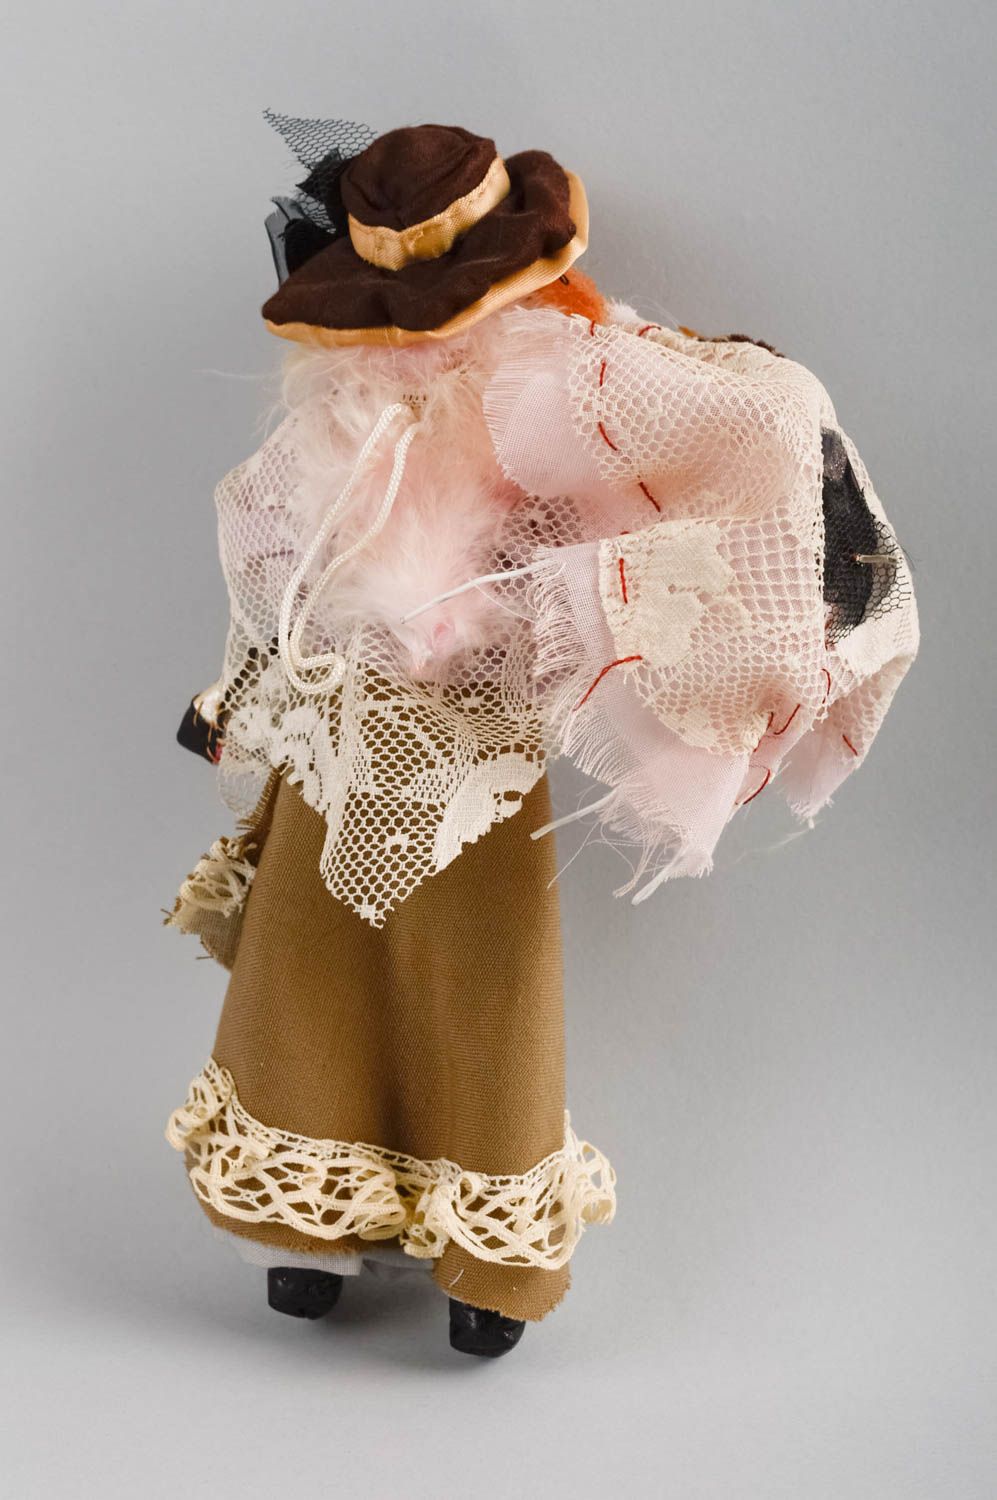 Handmade decorative rag doll for kids interior design and gift ideas  photo 2